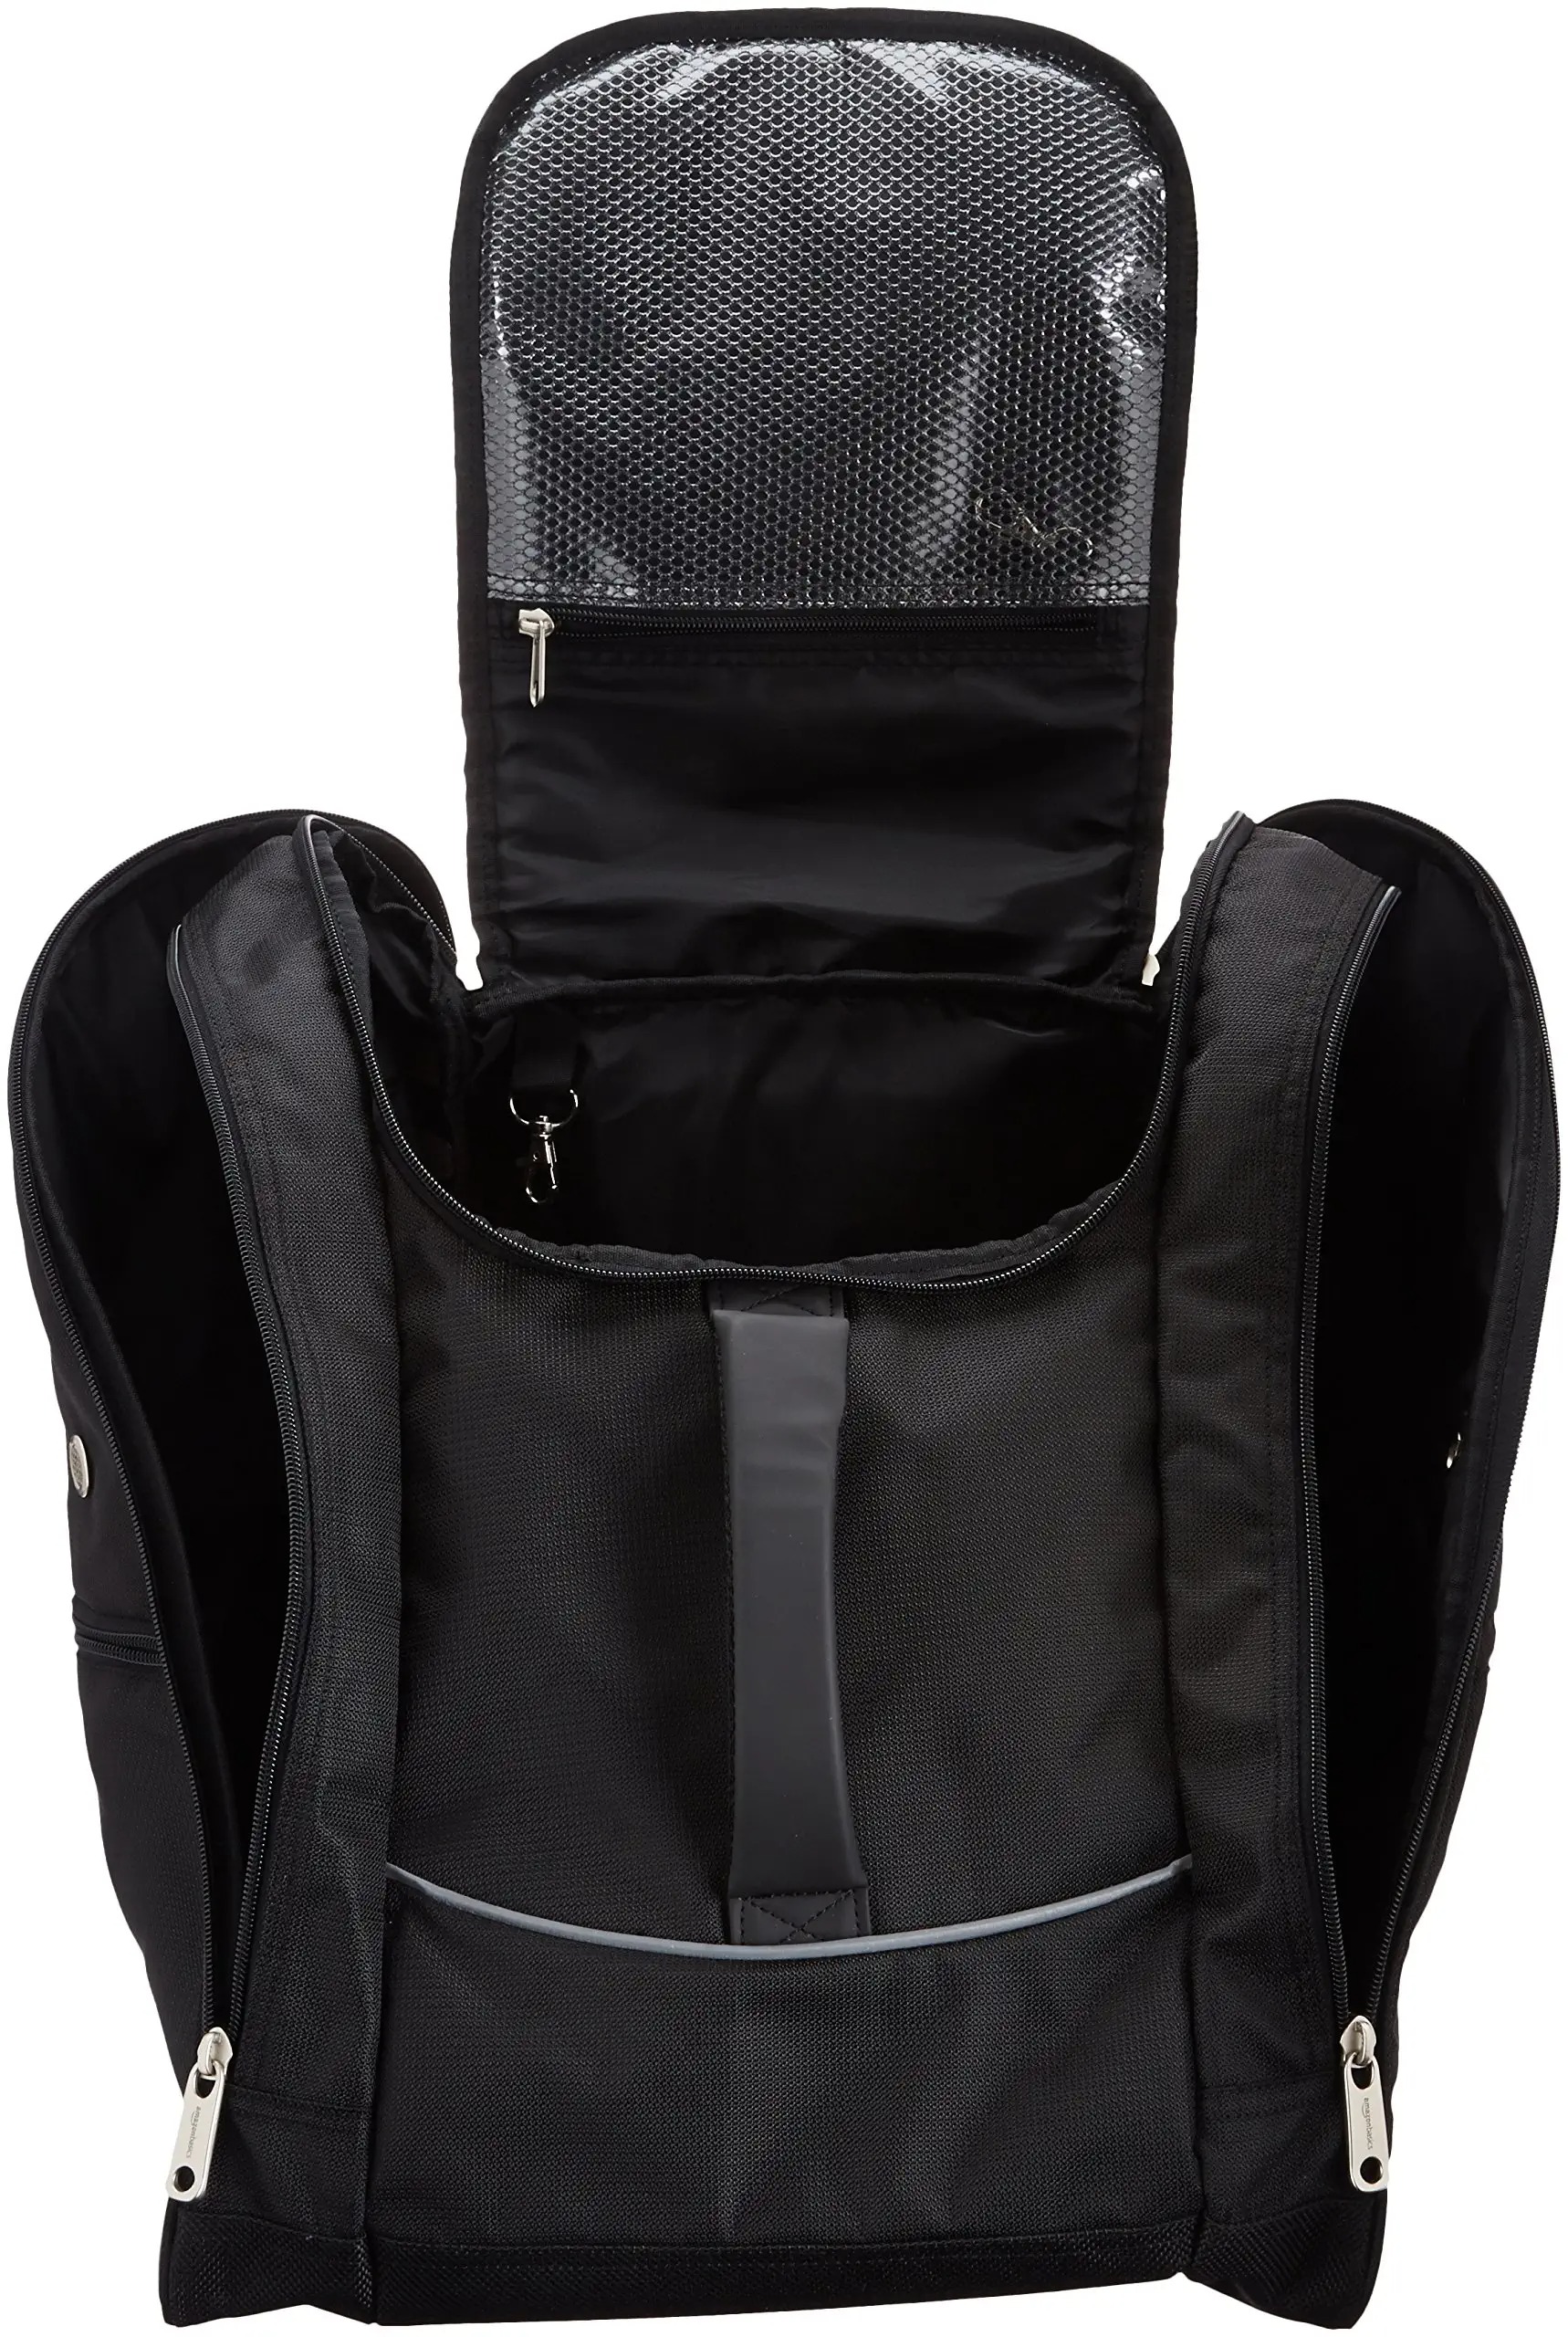 अनुकूलन योग्य वॉटरप्रूफ स्की बूट बैग, बड़ी क्षमता वाला बैग